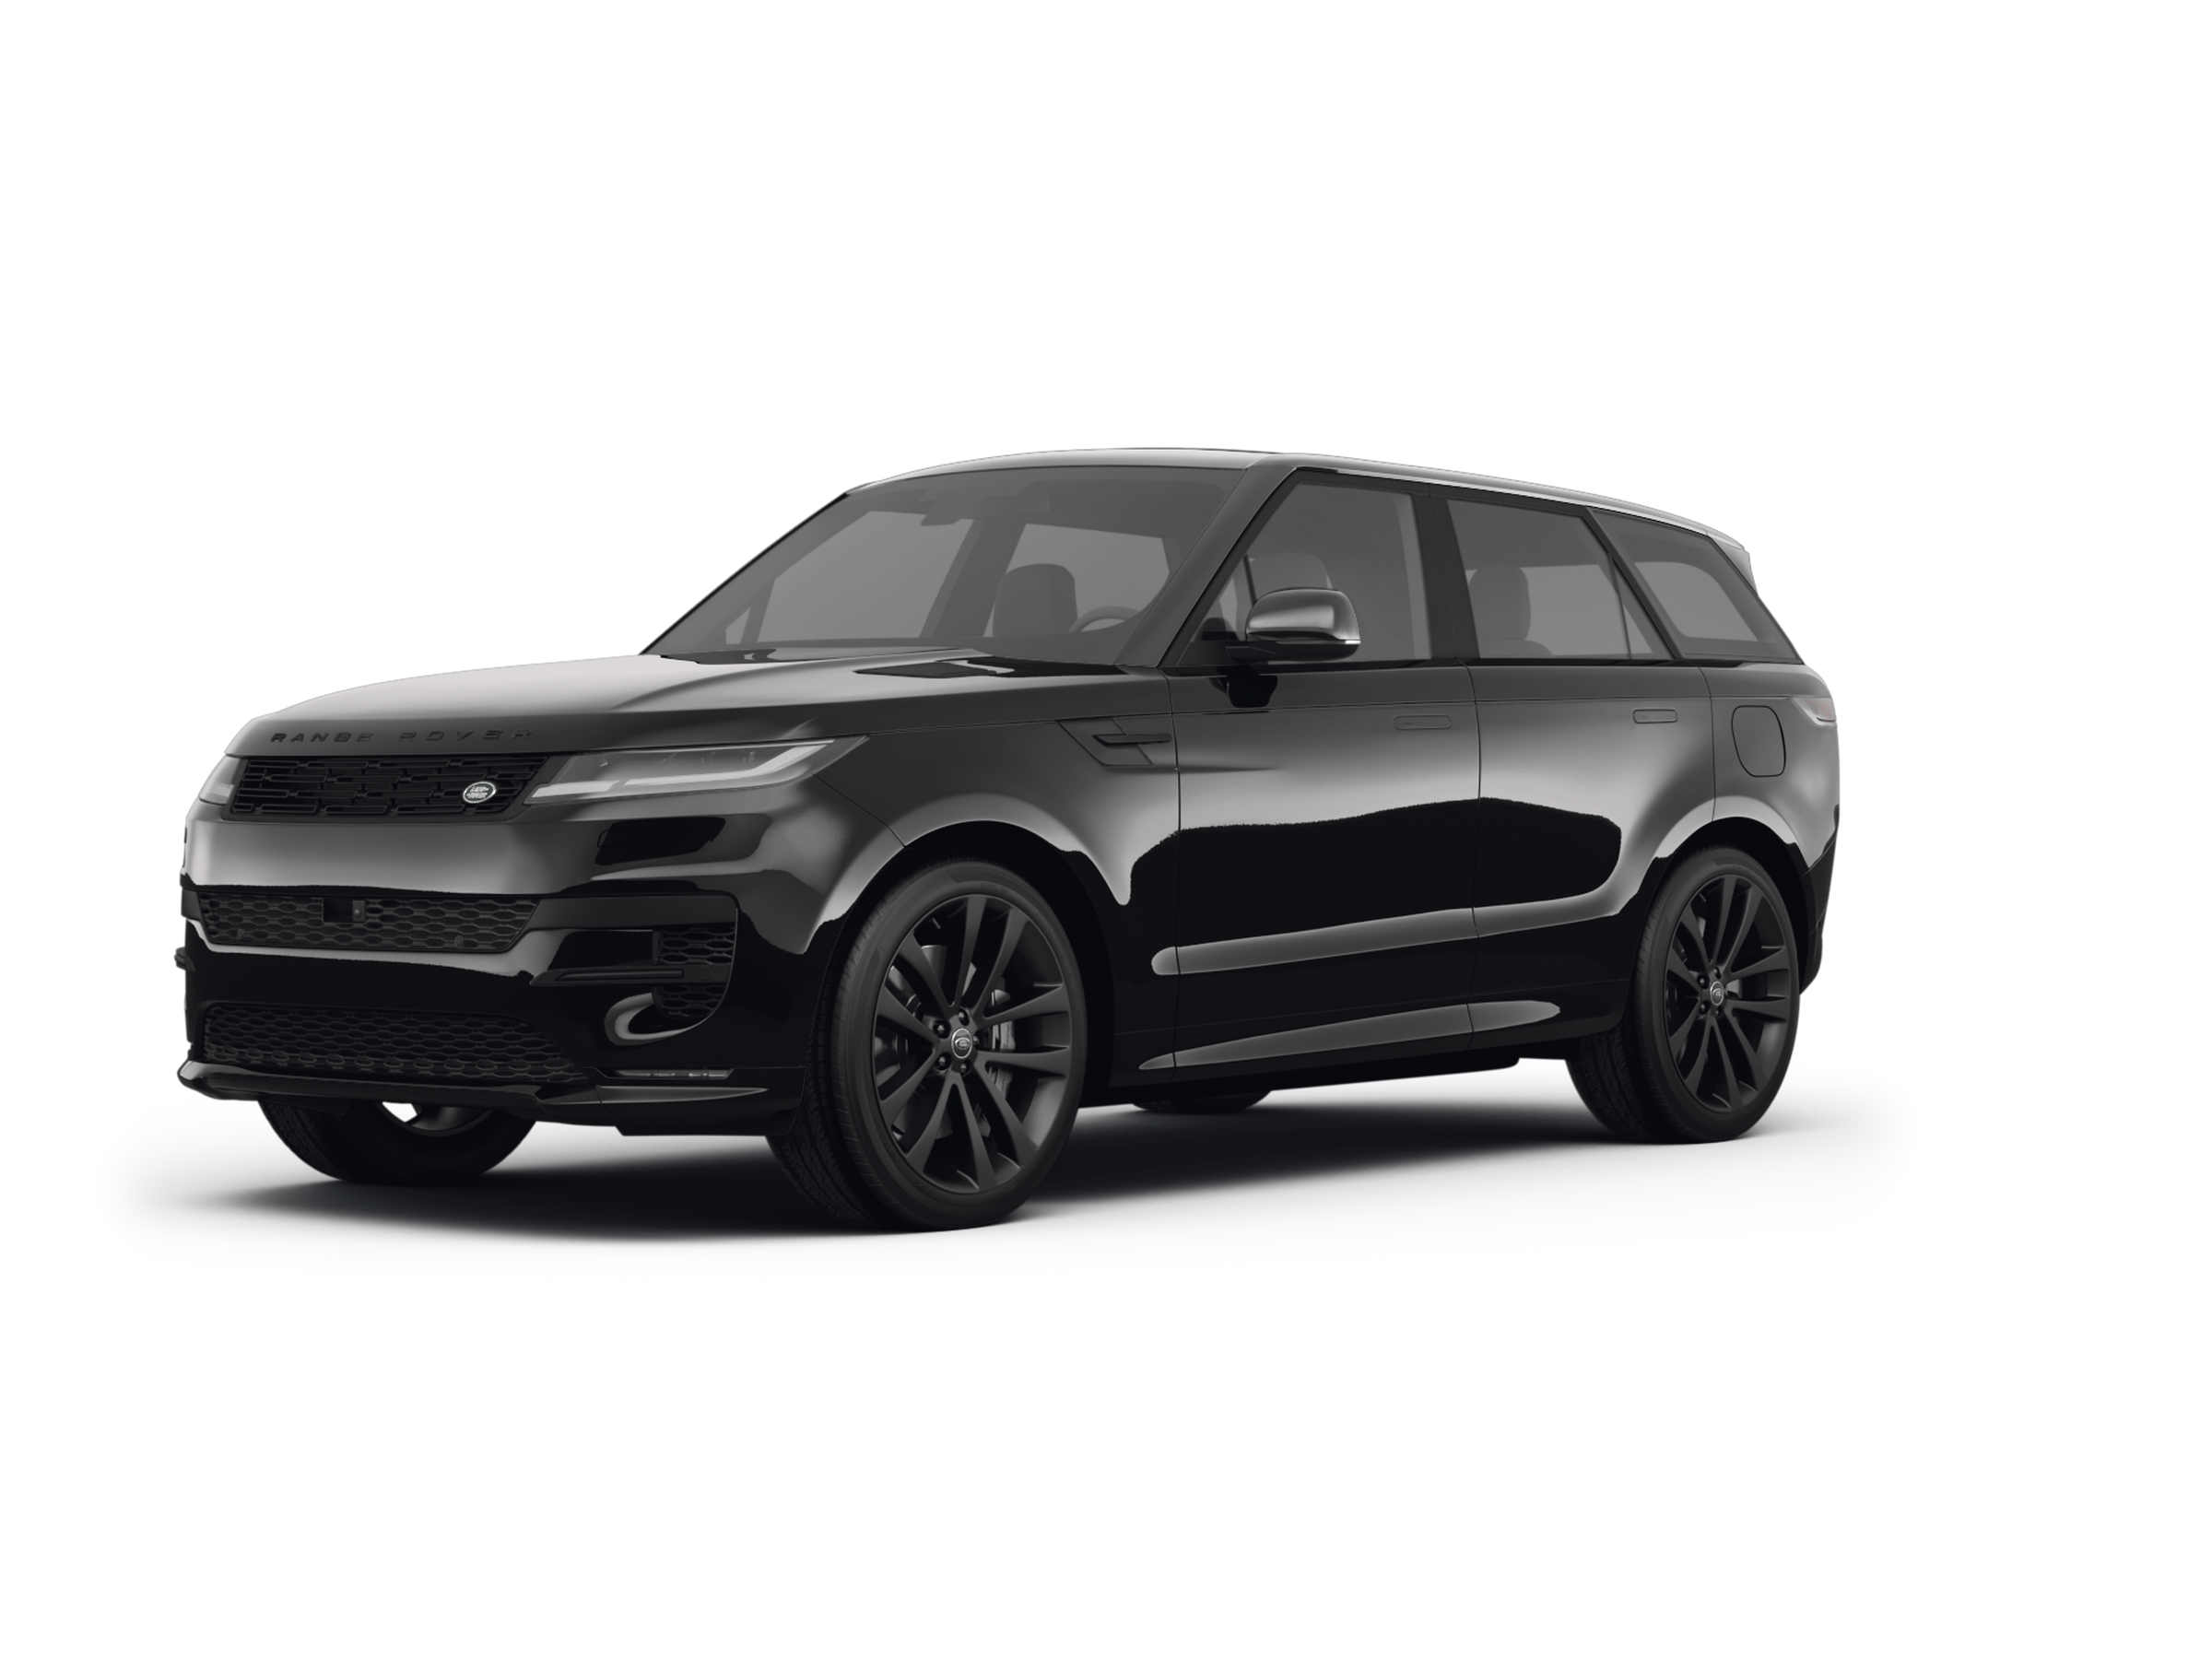 2023 Range Rover Sport Price & Configurations